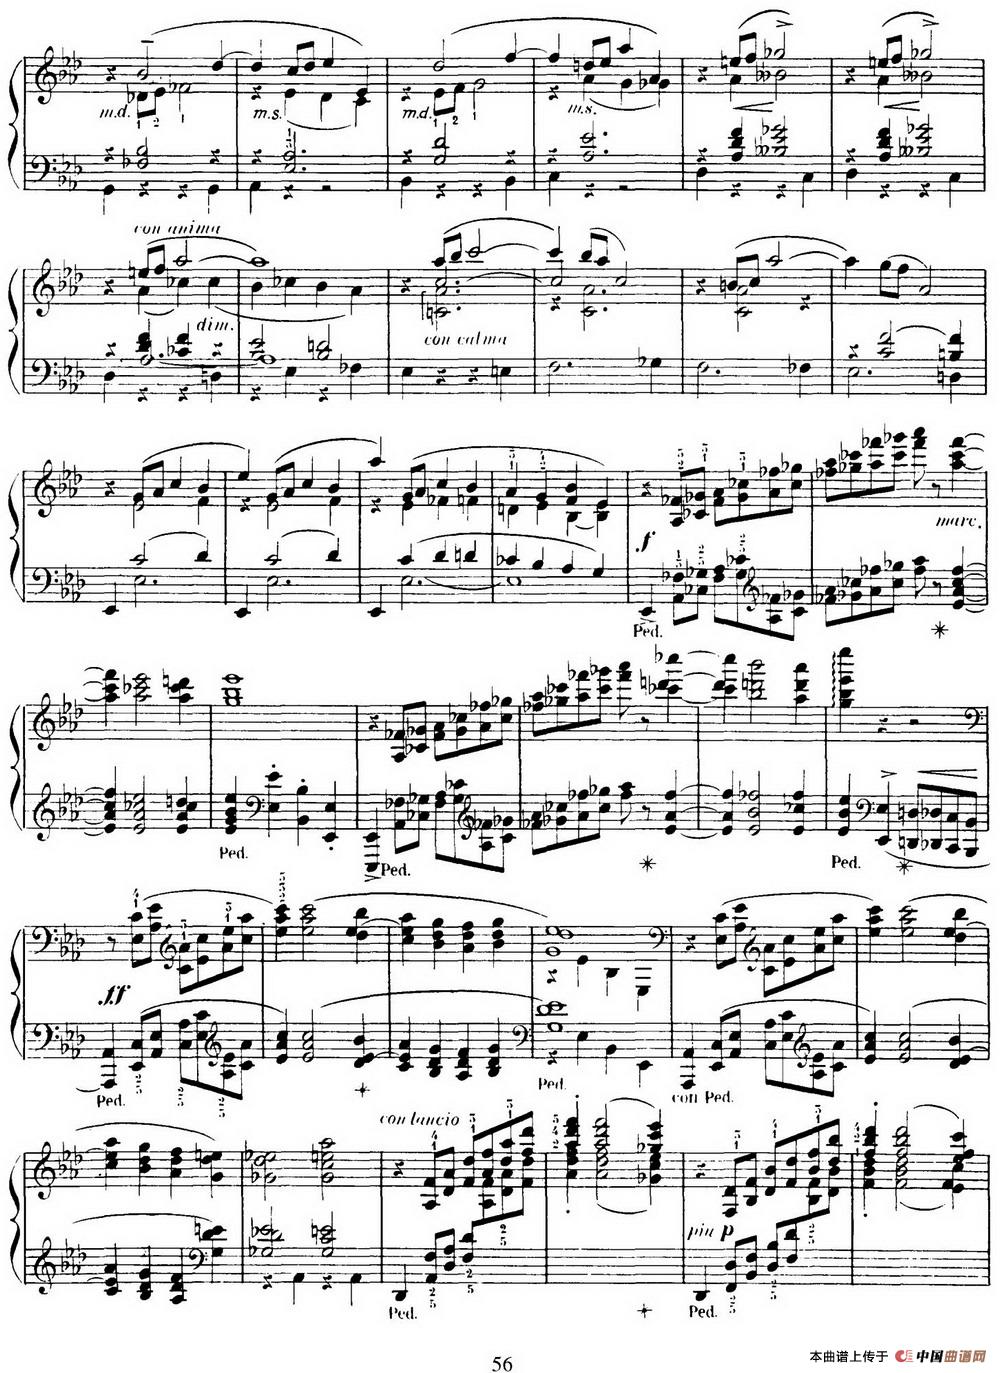 15 Etudes de Virtuosité Op.72 No.13（十五首钢琴练习曲之十三）(1)_056.jpg